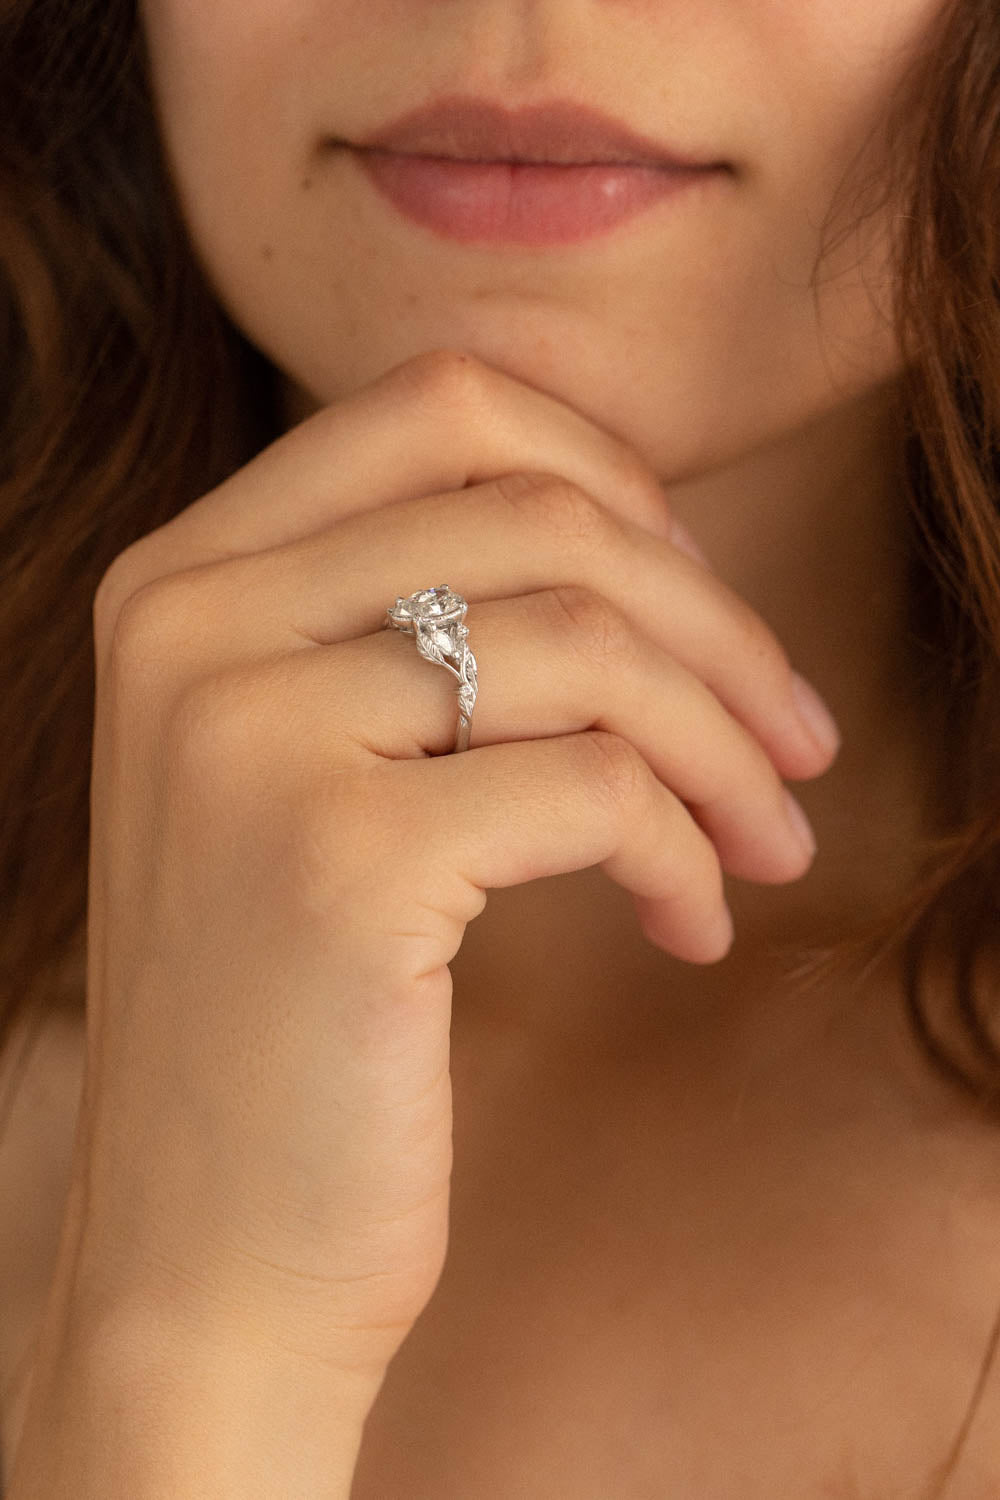 Patricia asymmetric | engagement ring setting for pear cut gemstone 8x6 mm - Eden Garden Jewelry™